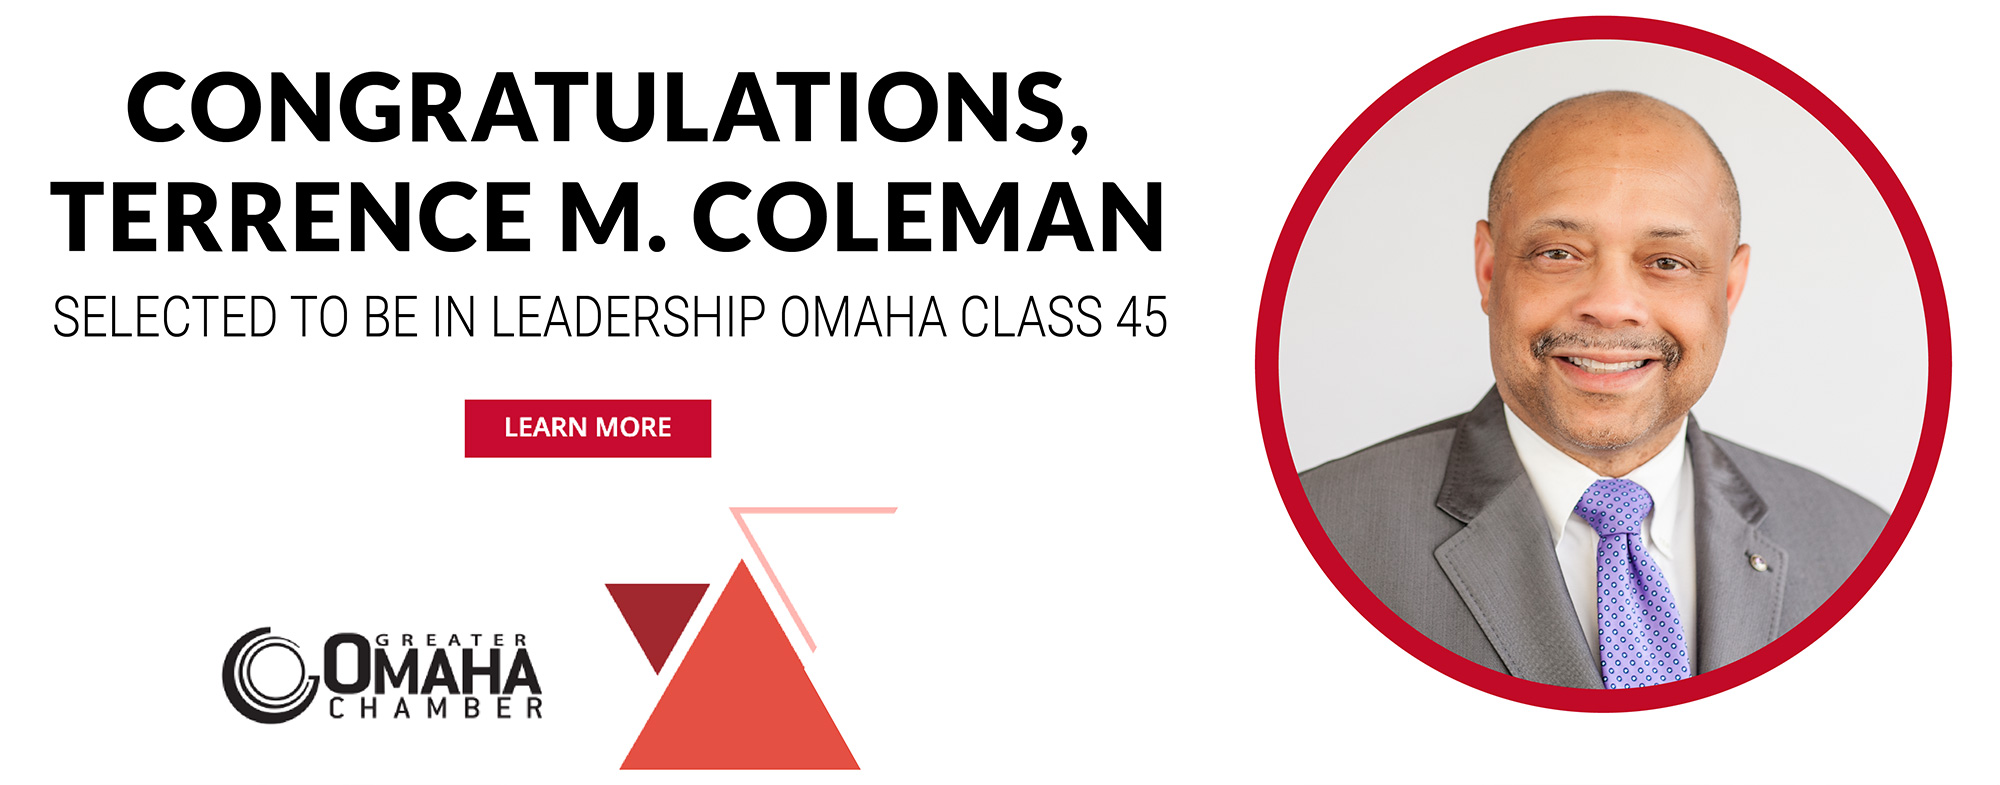 Congratulations Terrance M. Coleman